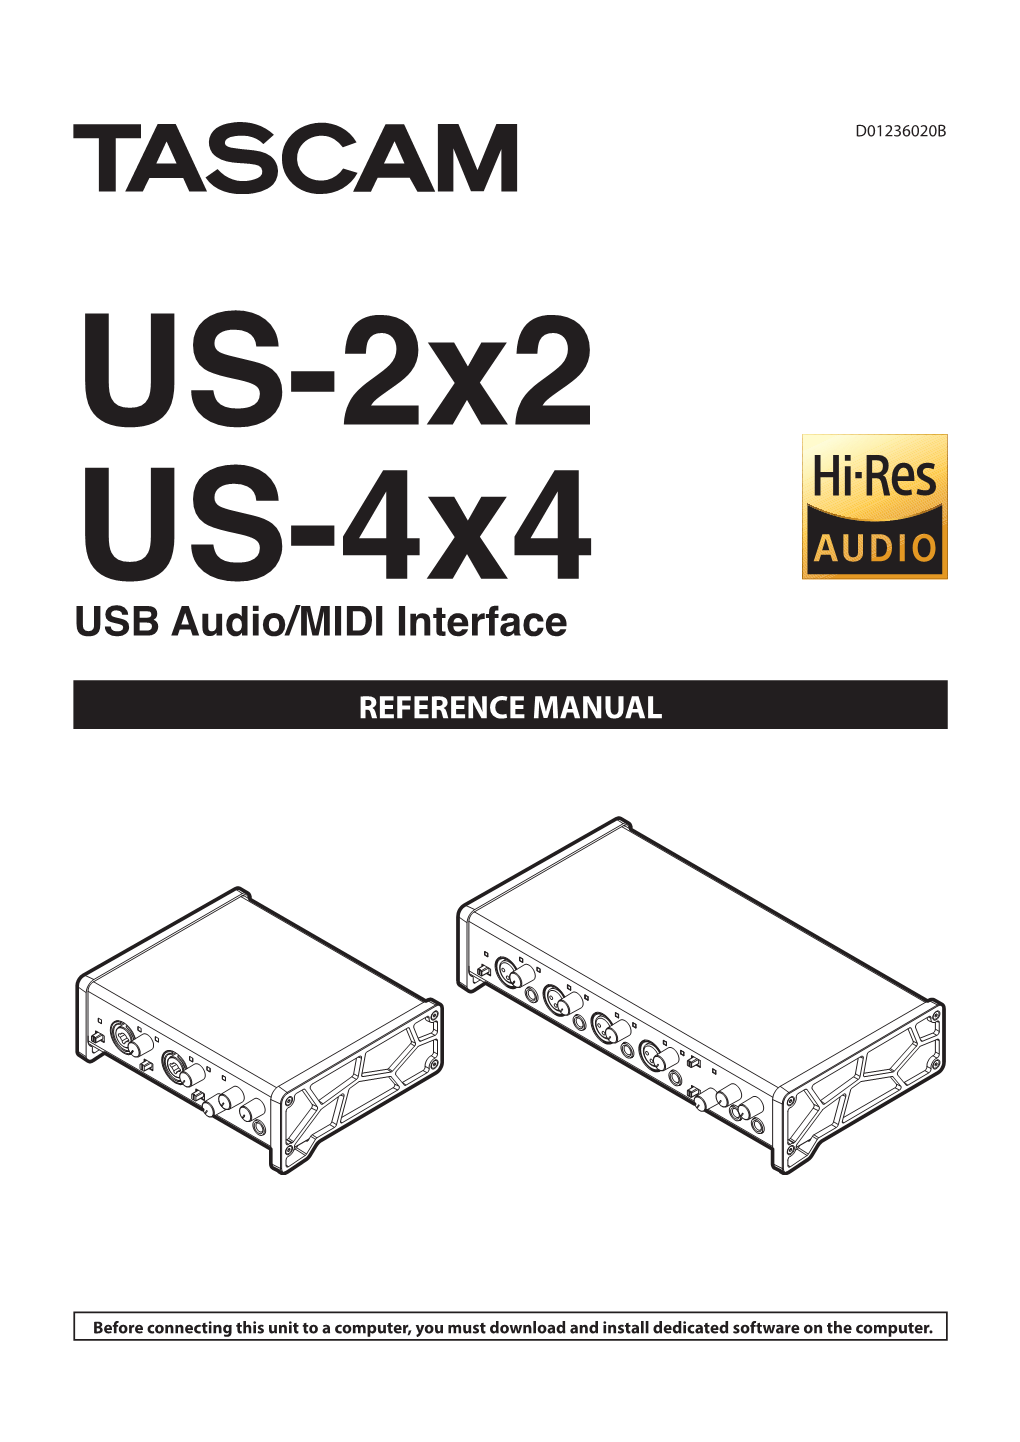 USB Audio/MIDI Interface